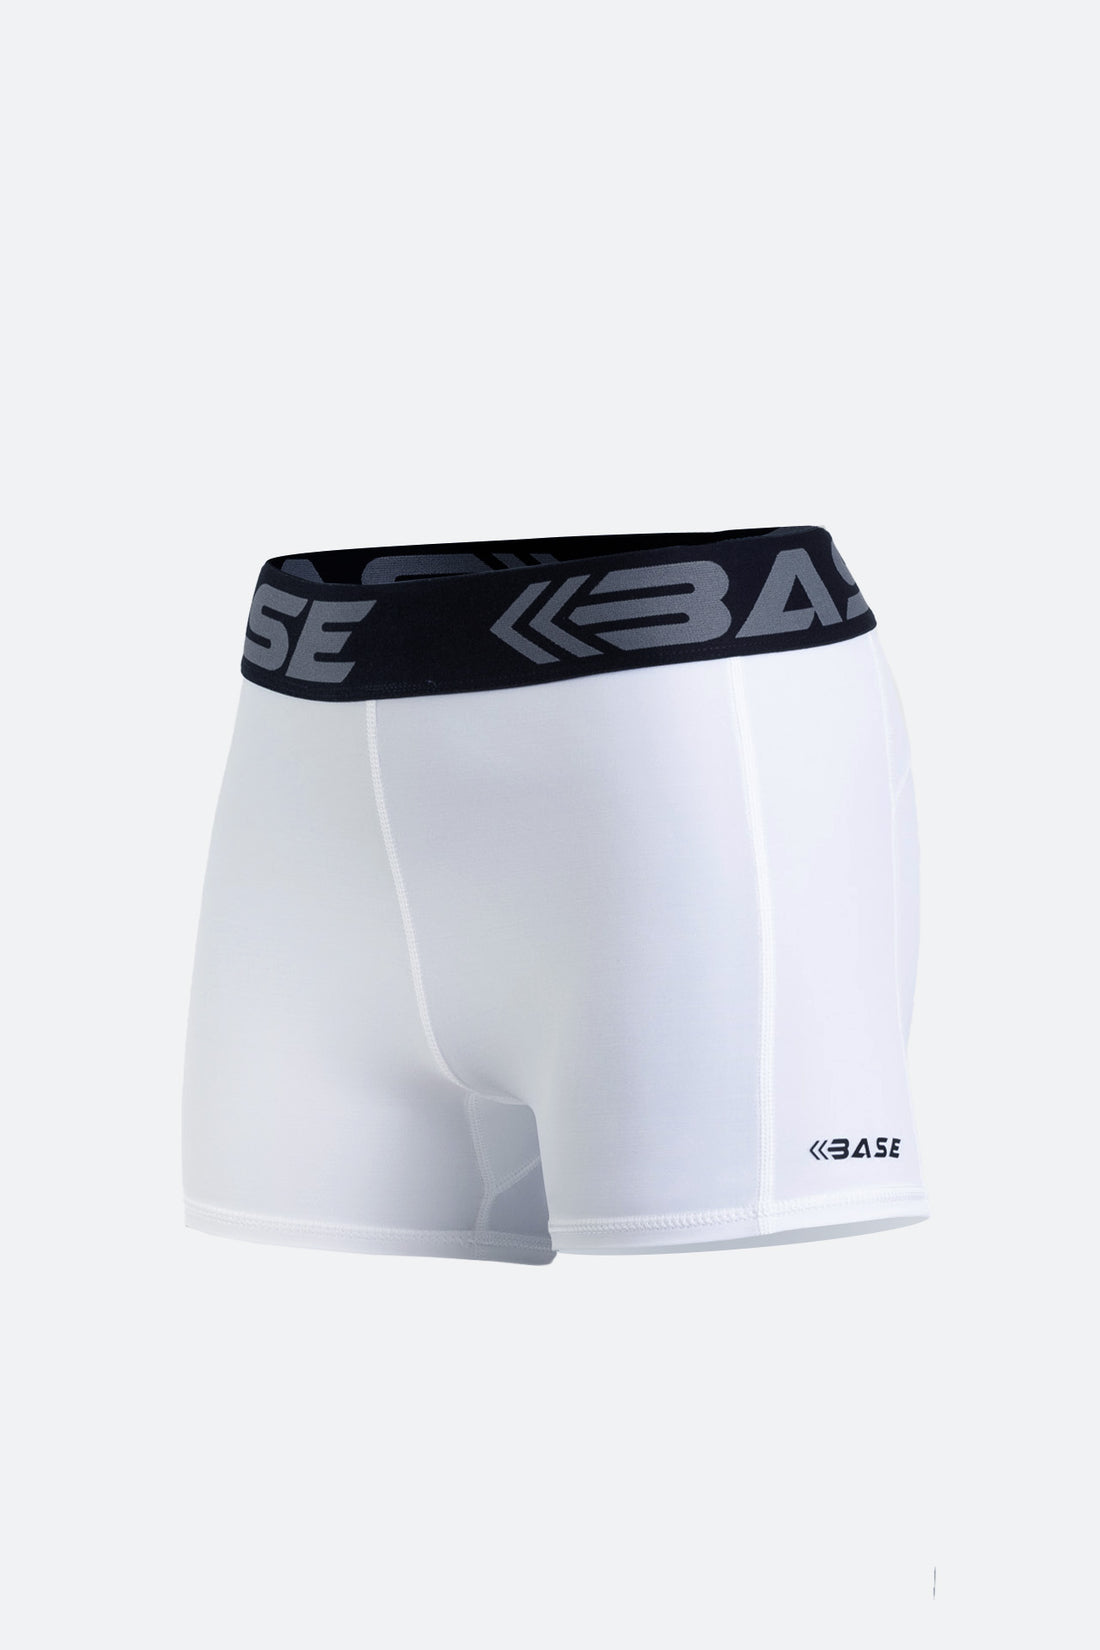 BASE Youth Compression Shorts - White